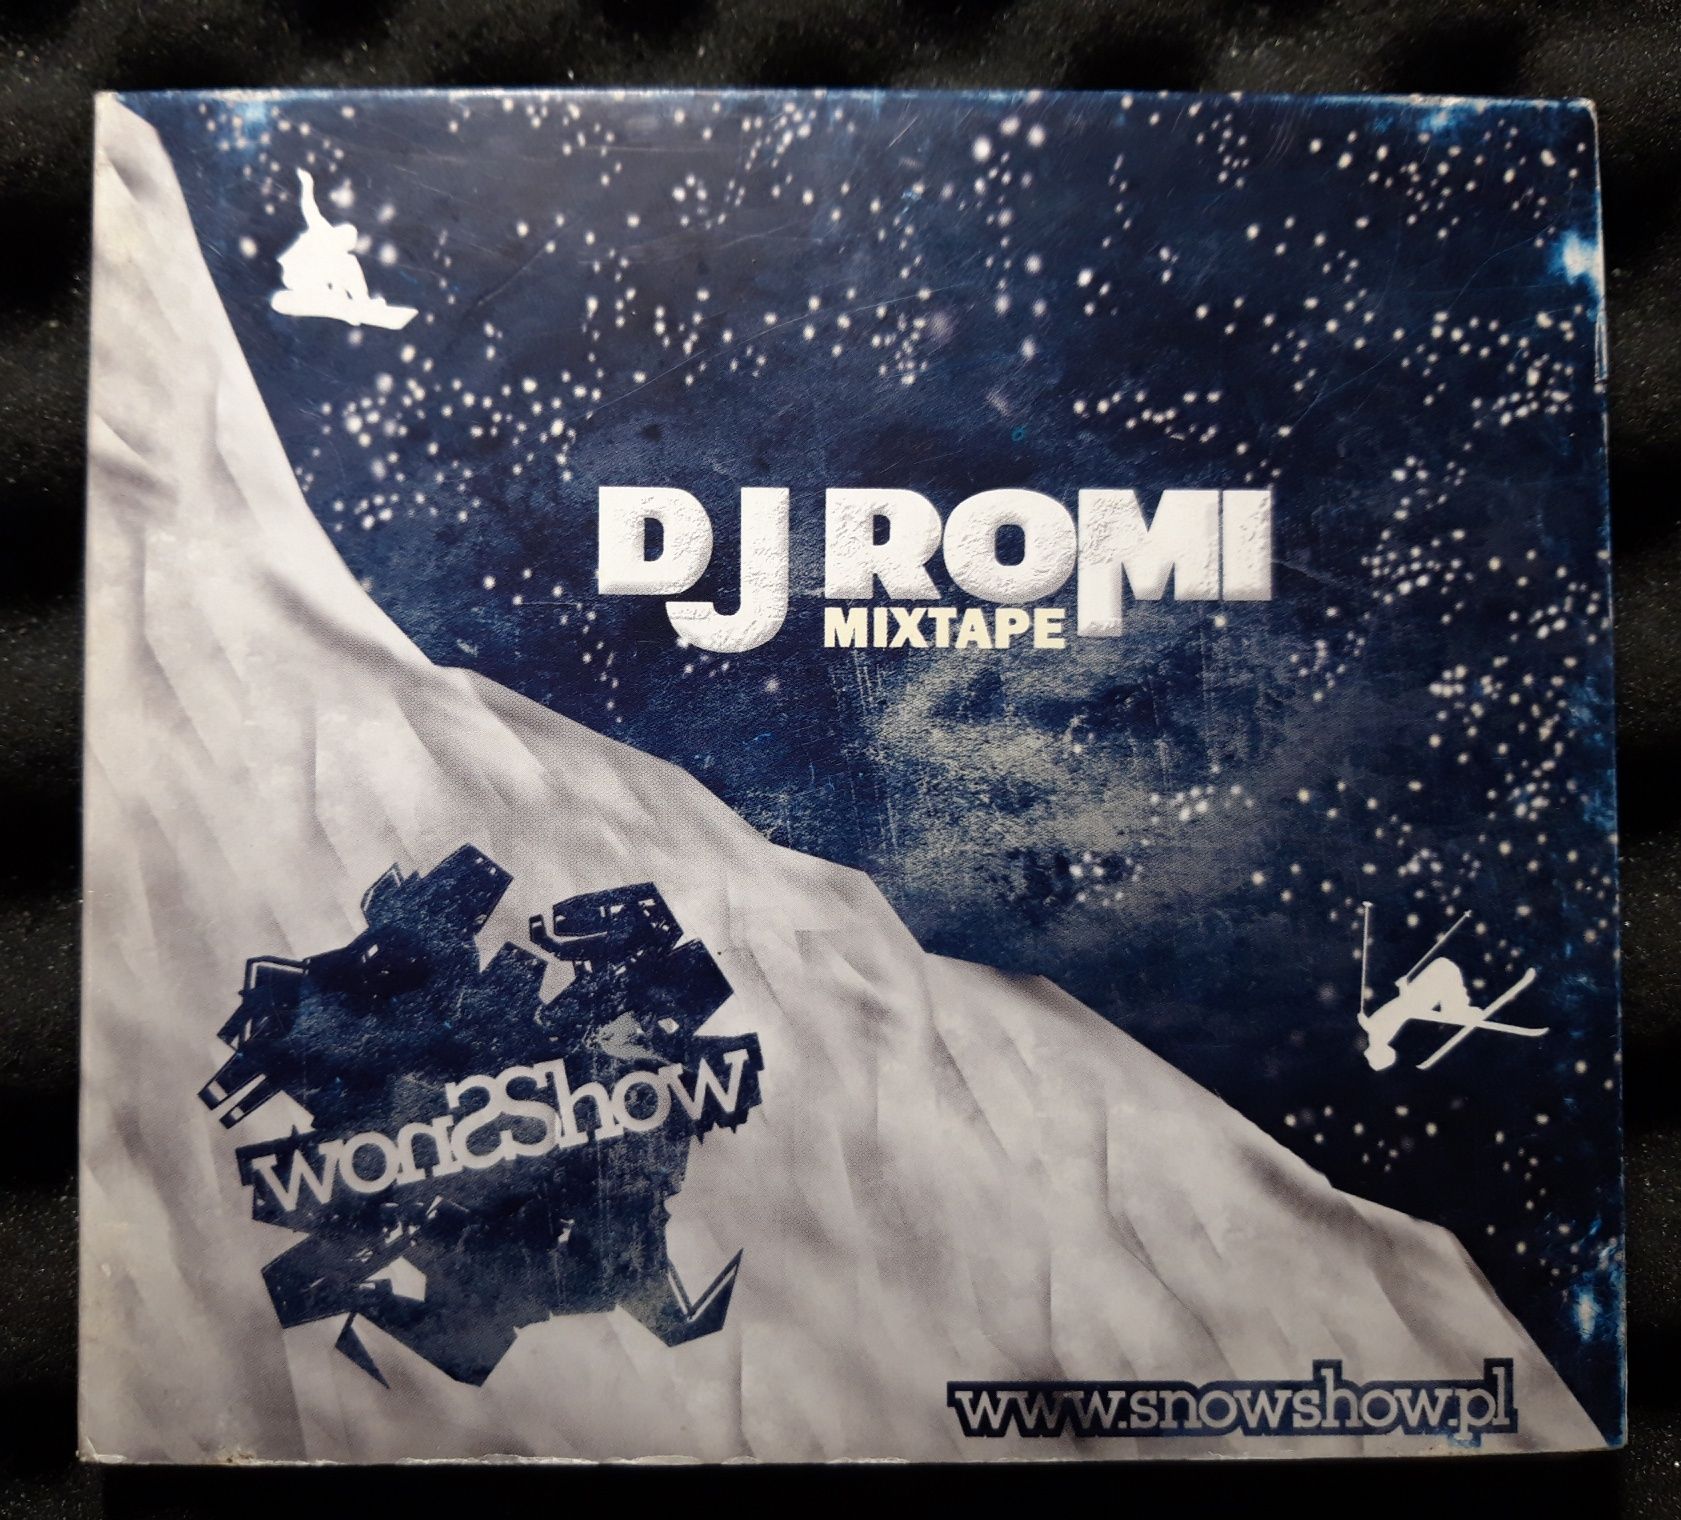 Snowshow Mixtape Vol. 1 Dj Romi (CD, 2011)